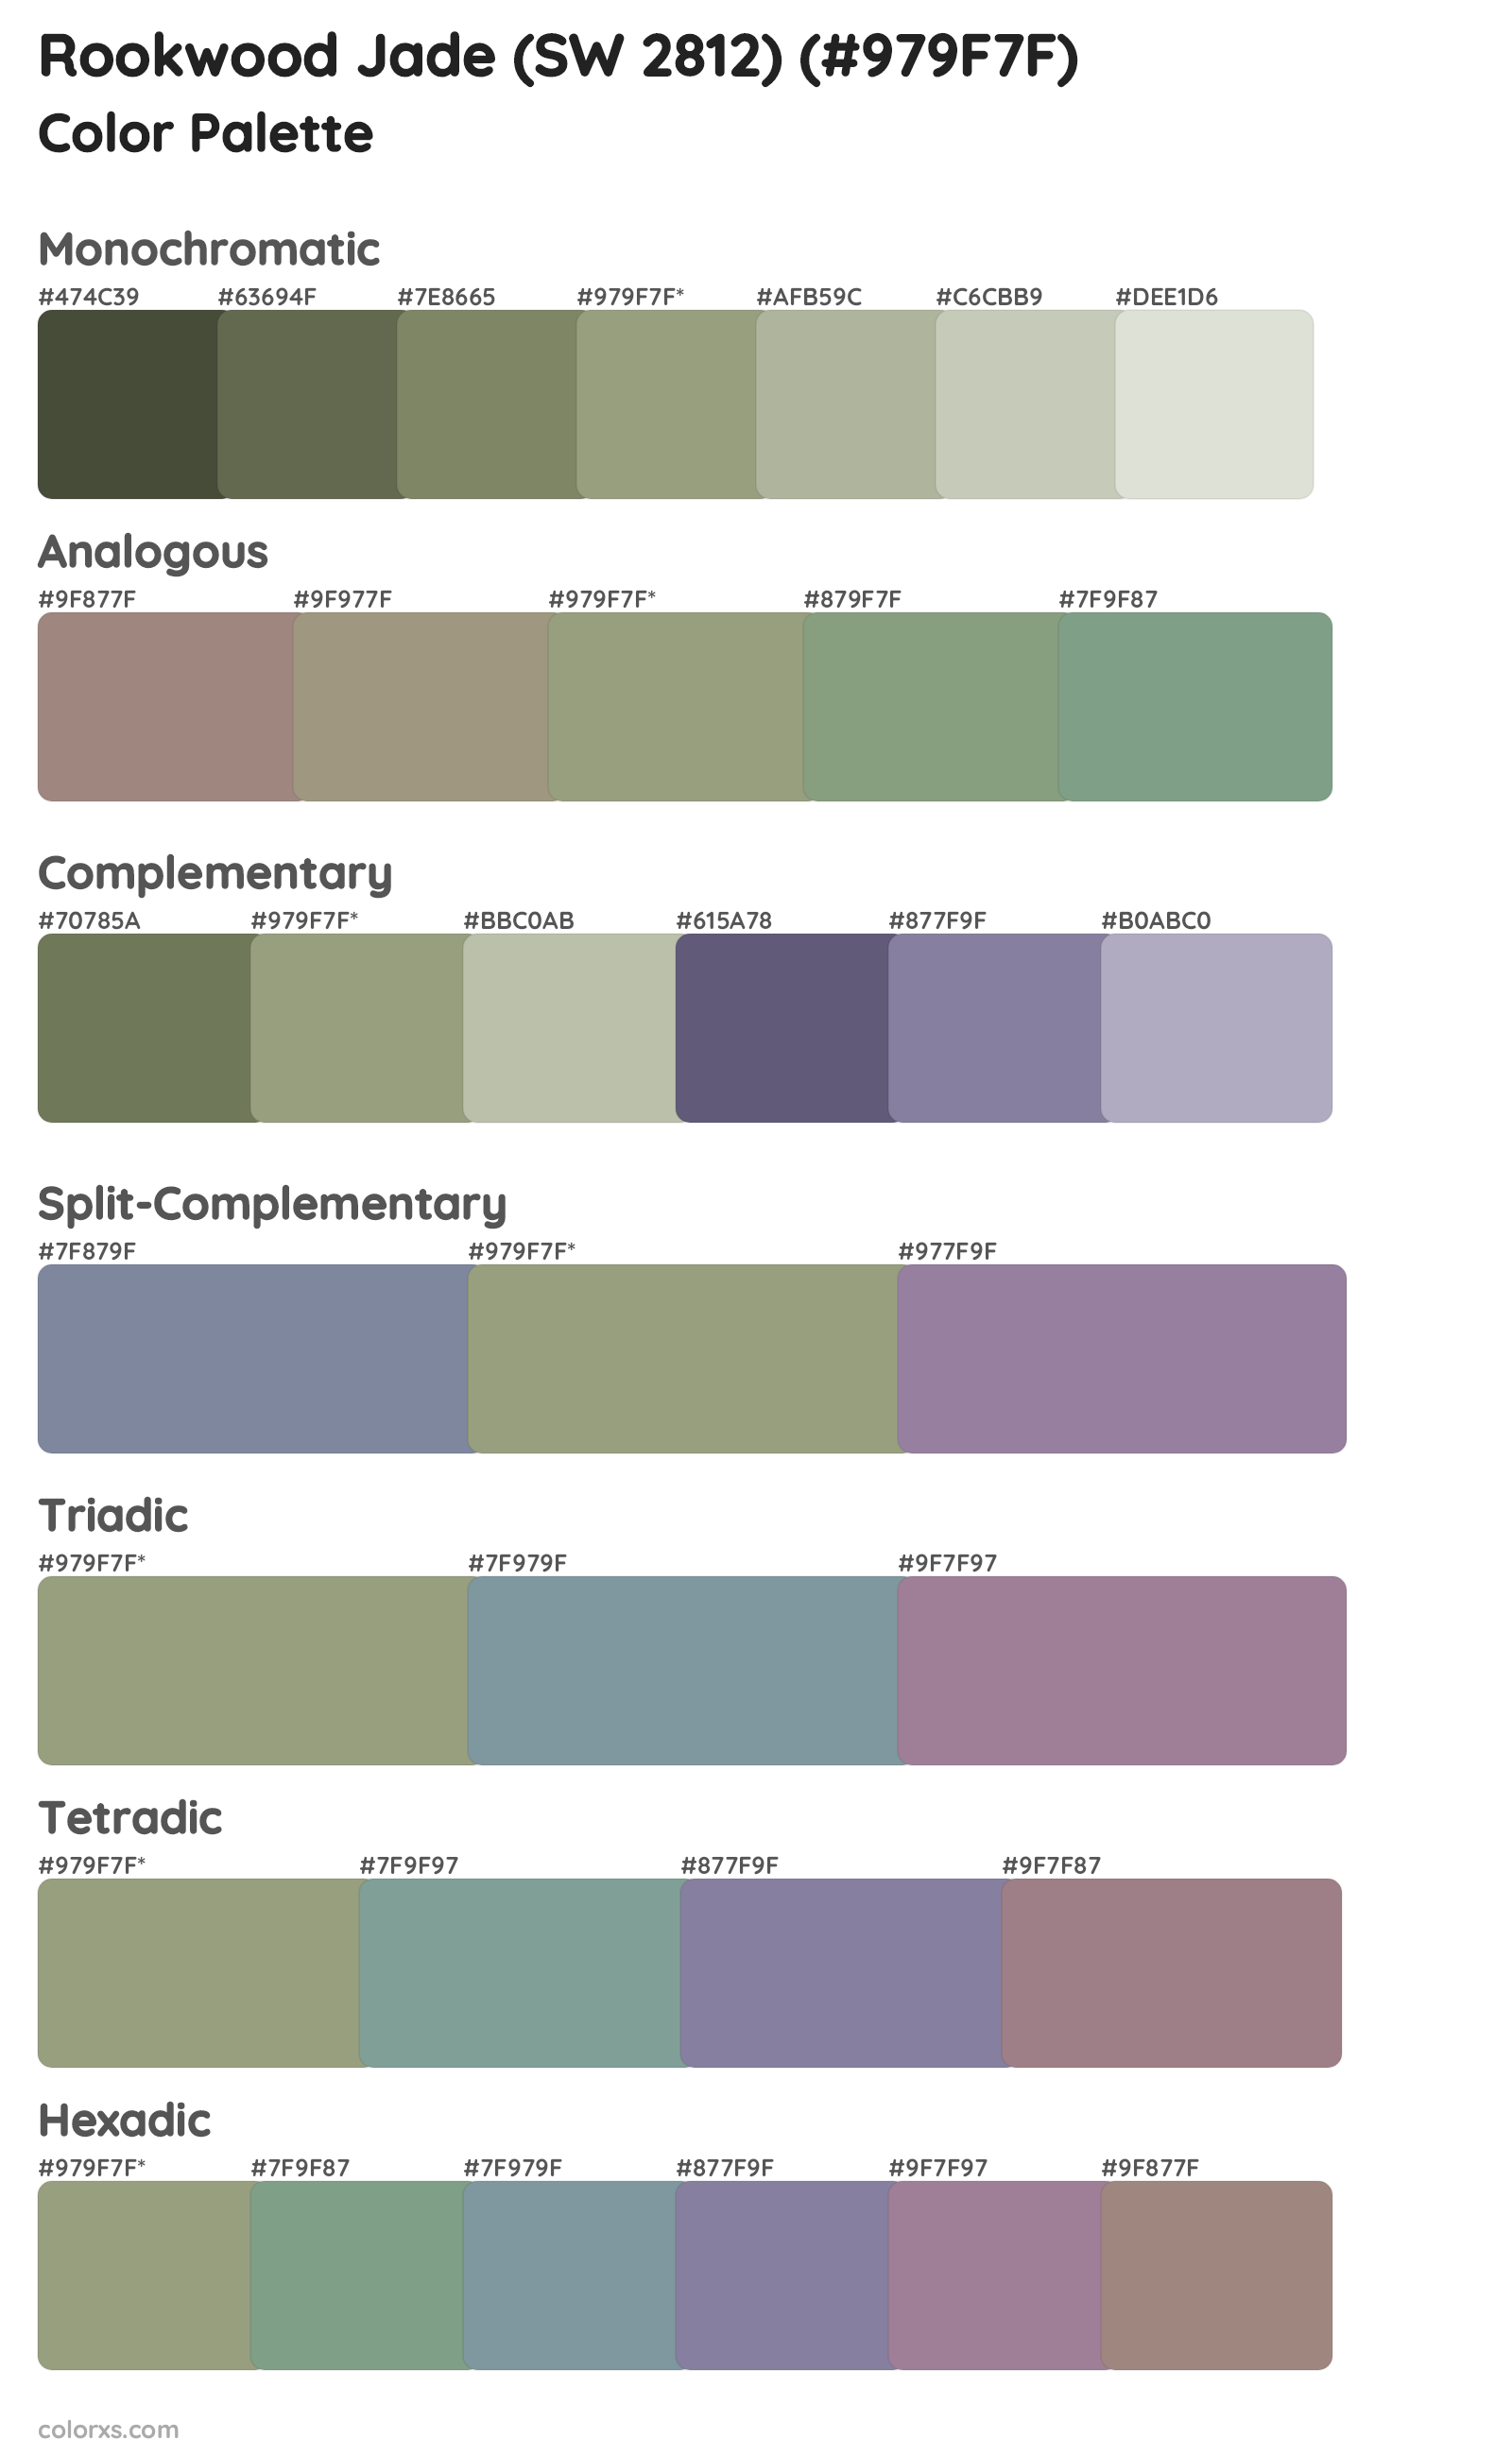 Rookwood Jade (SW 2812) Color Scheme Palettes